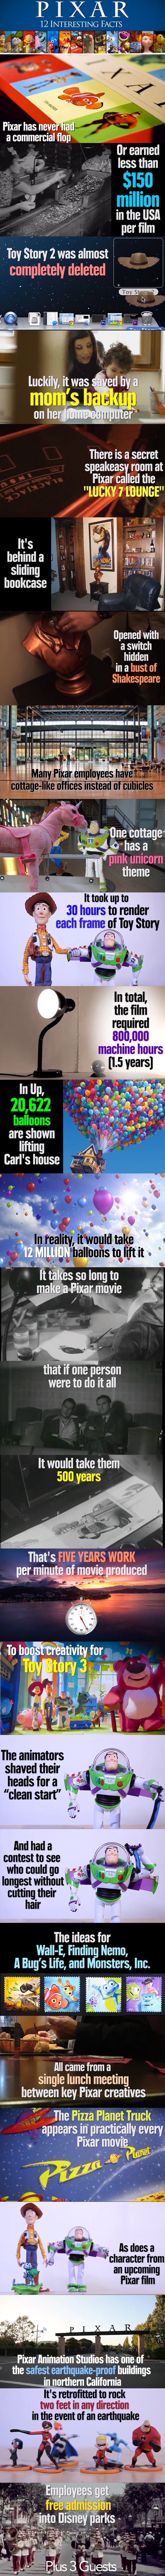 Vamers - FYI - 12 Interesting Facts about Disney's Pixar - FULL